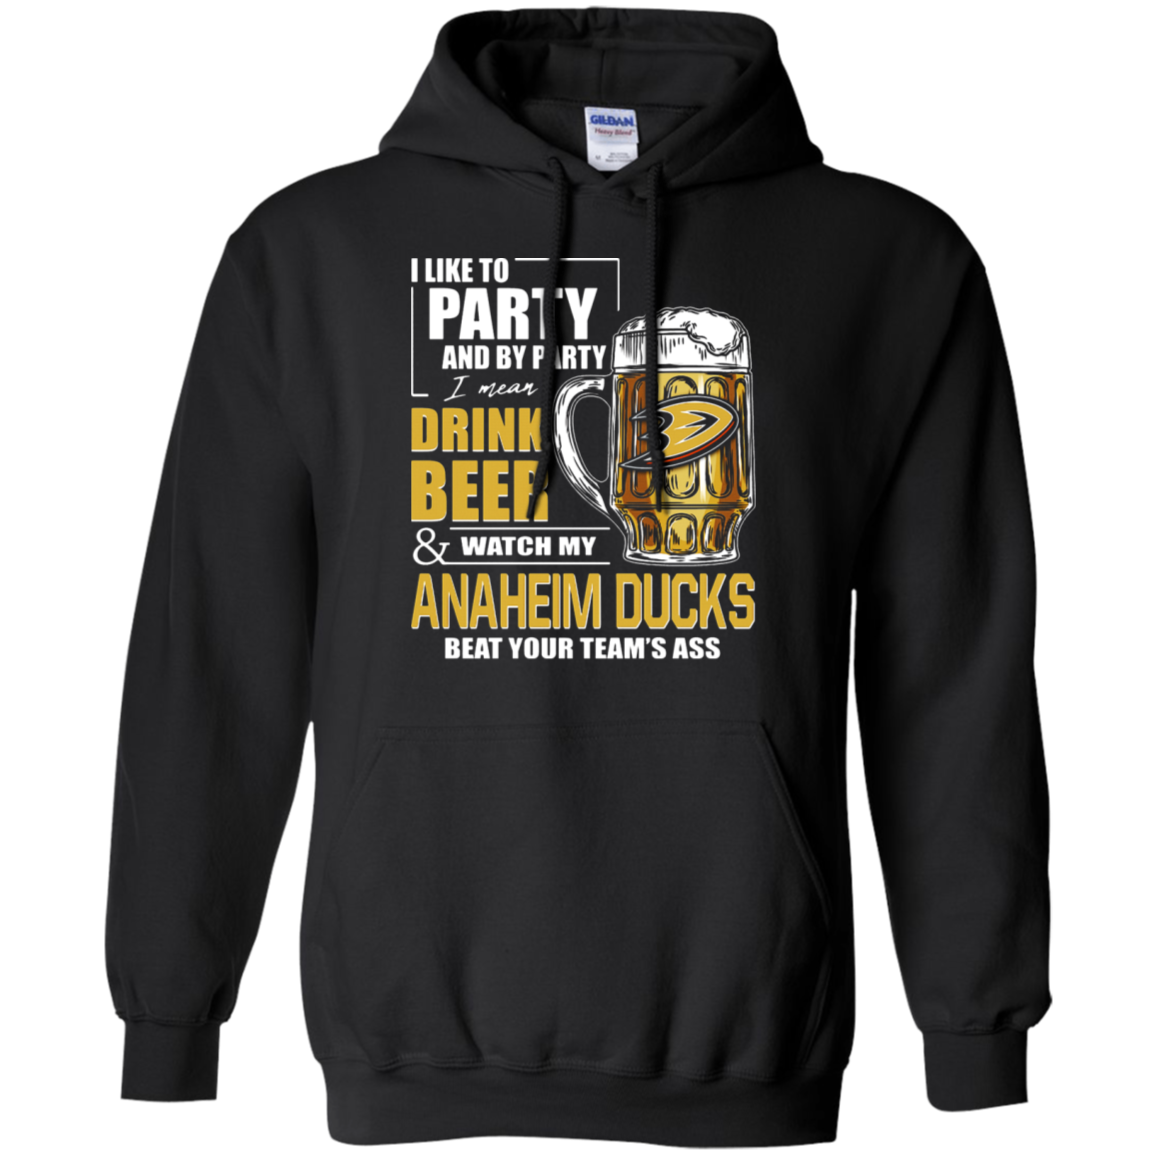 I Like To Drink Beer & Watch My Anaheim Ducks Ice Hockey Shirts